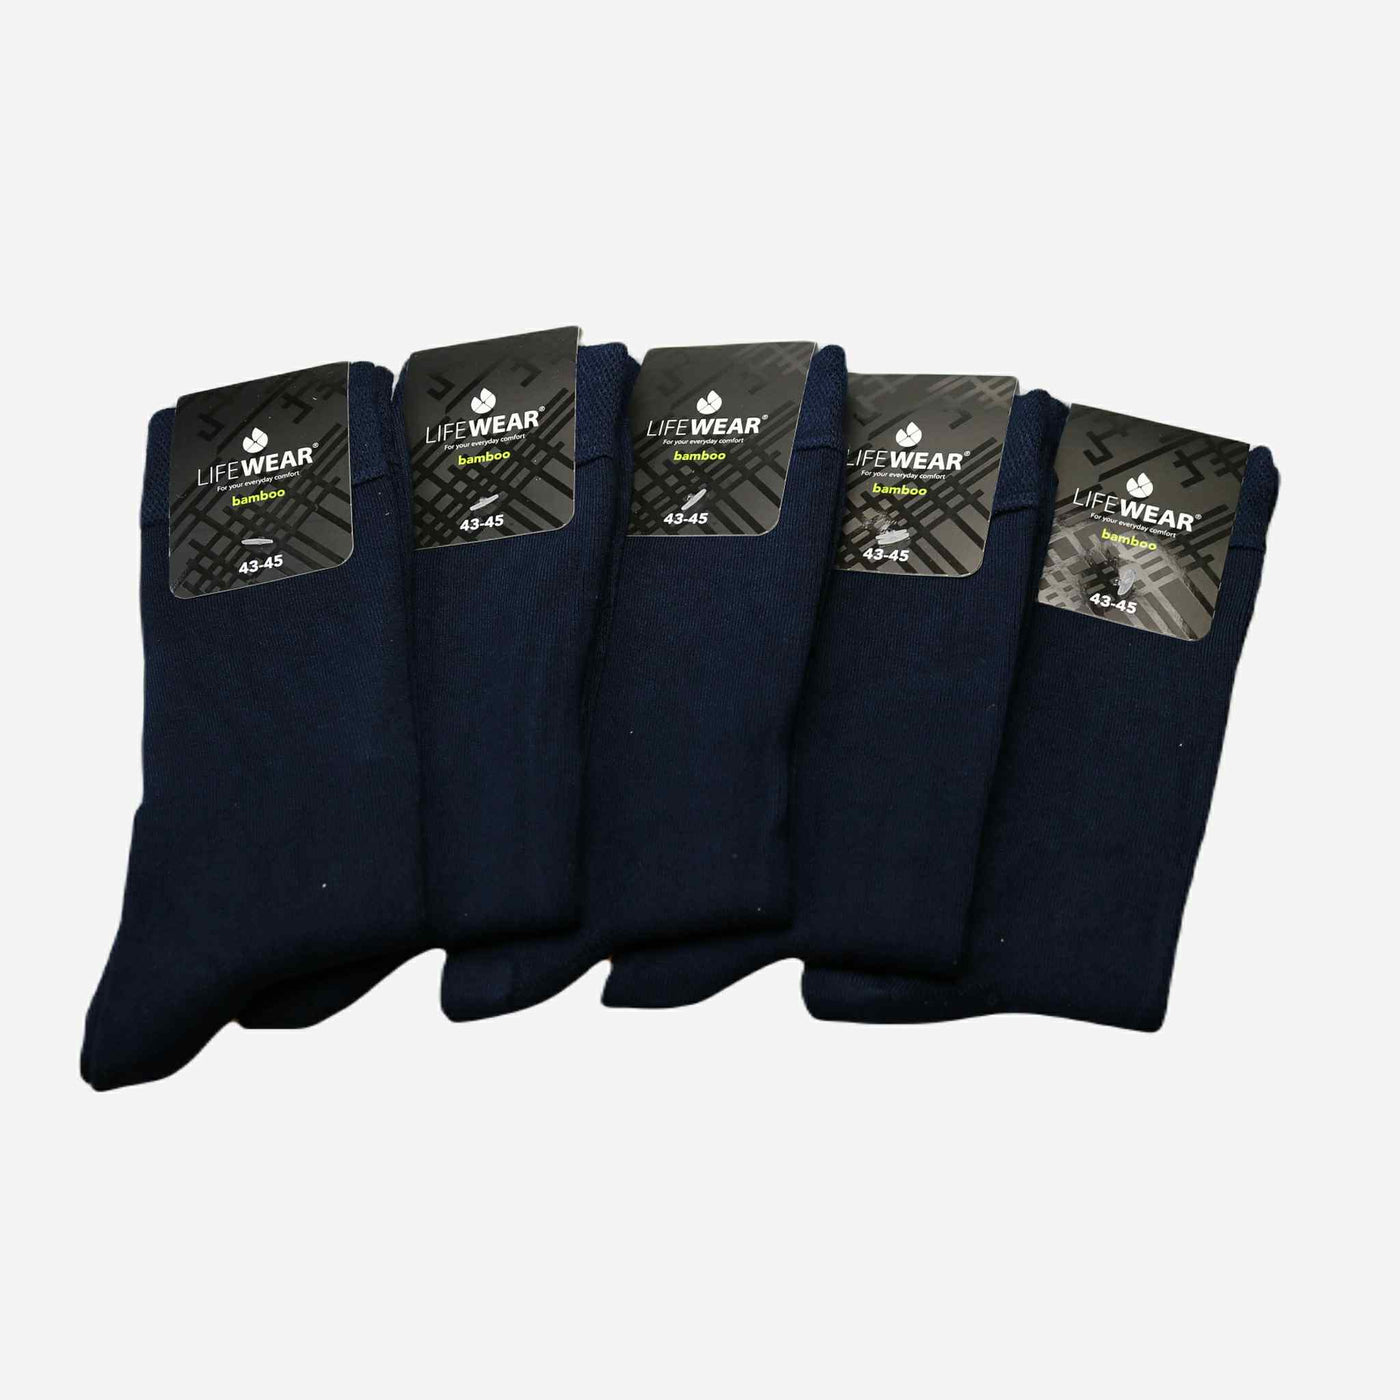 Navy blue bamboo socks